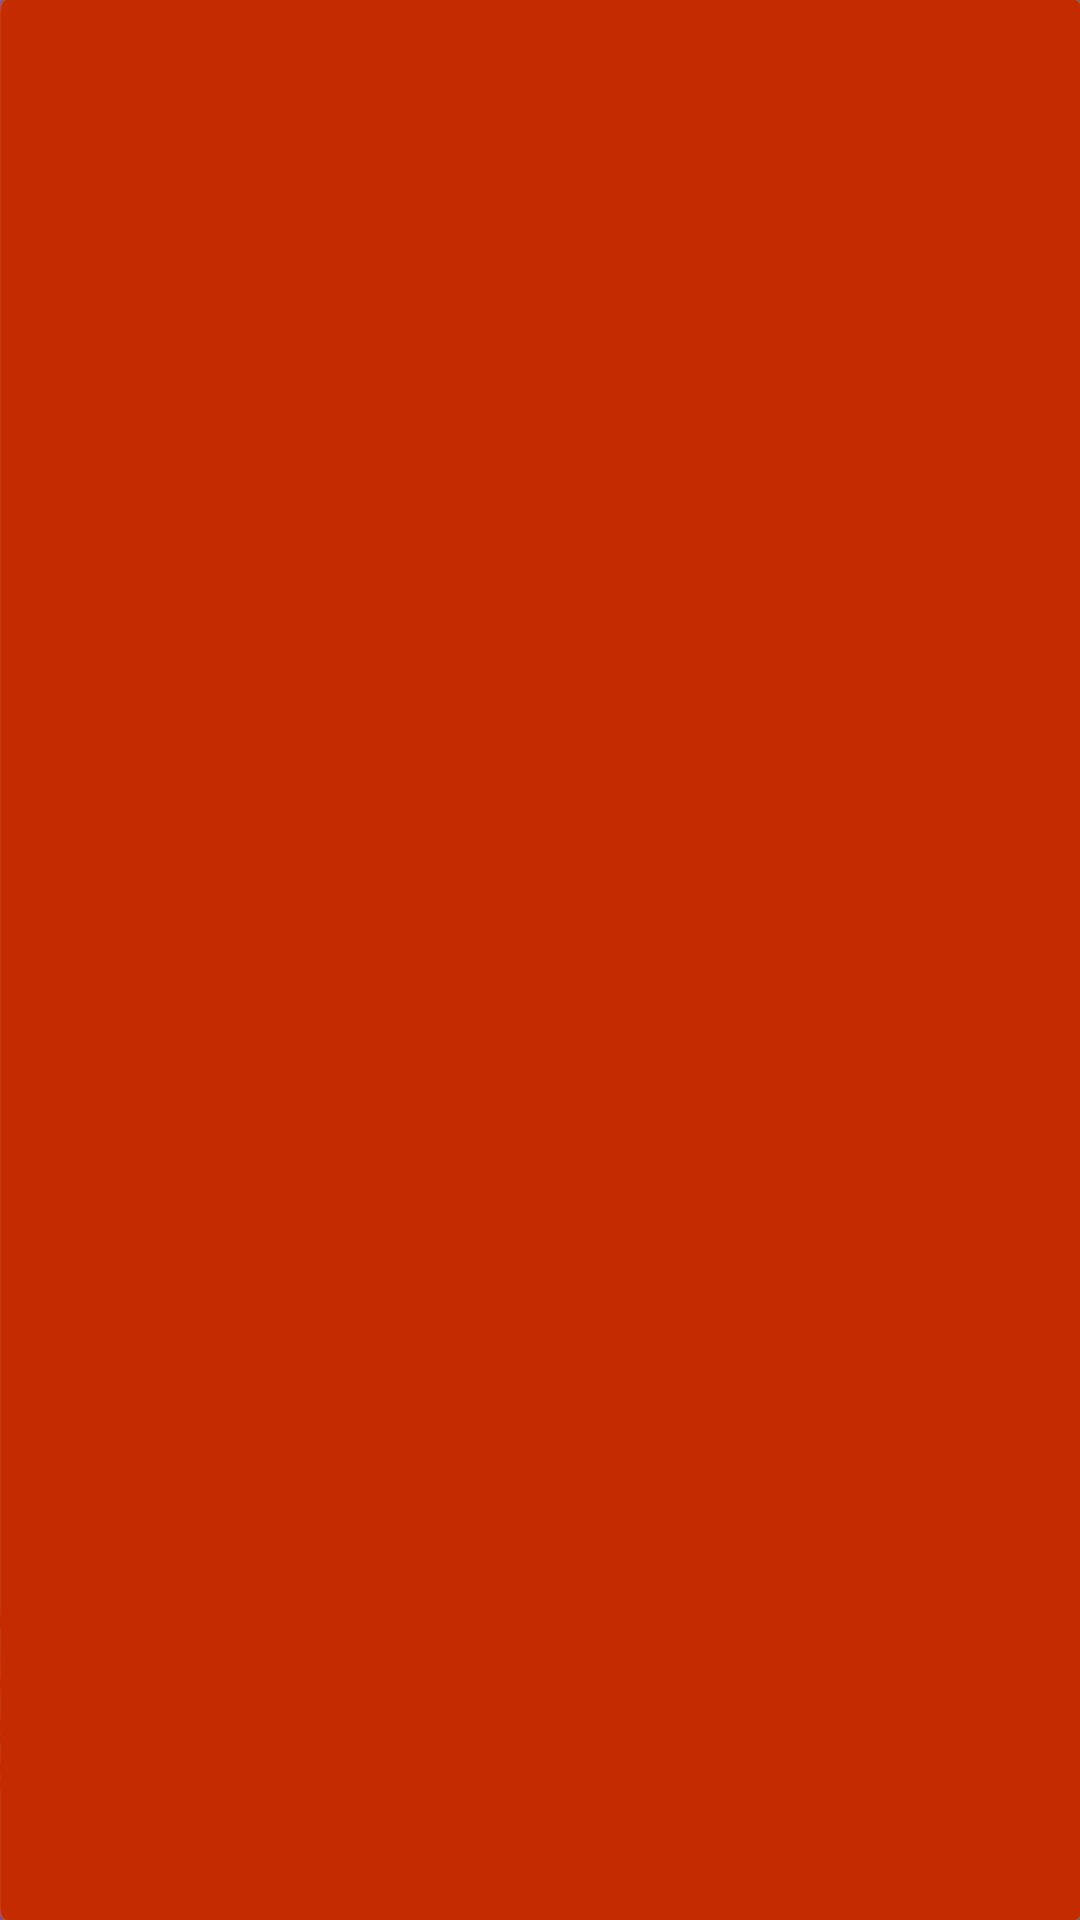 Solid Scarlet Farve Iphone Wallpaper